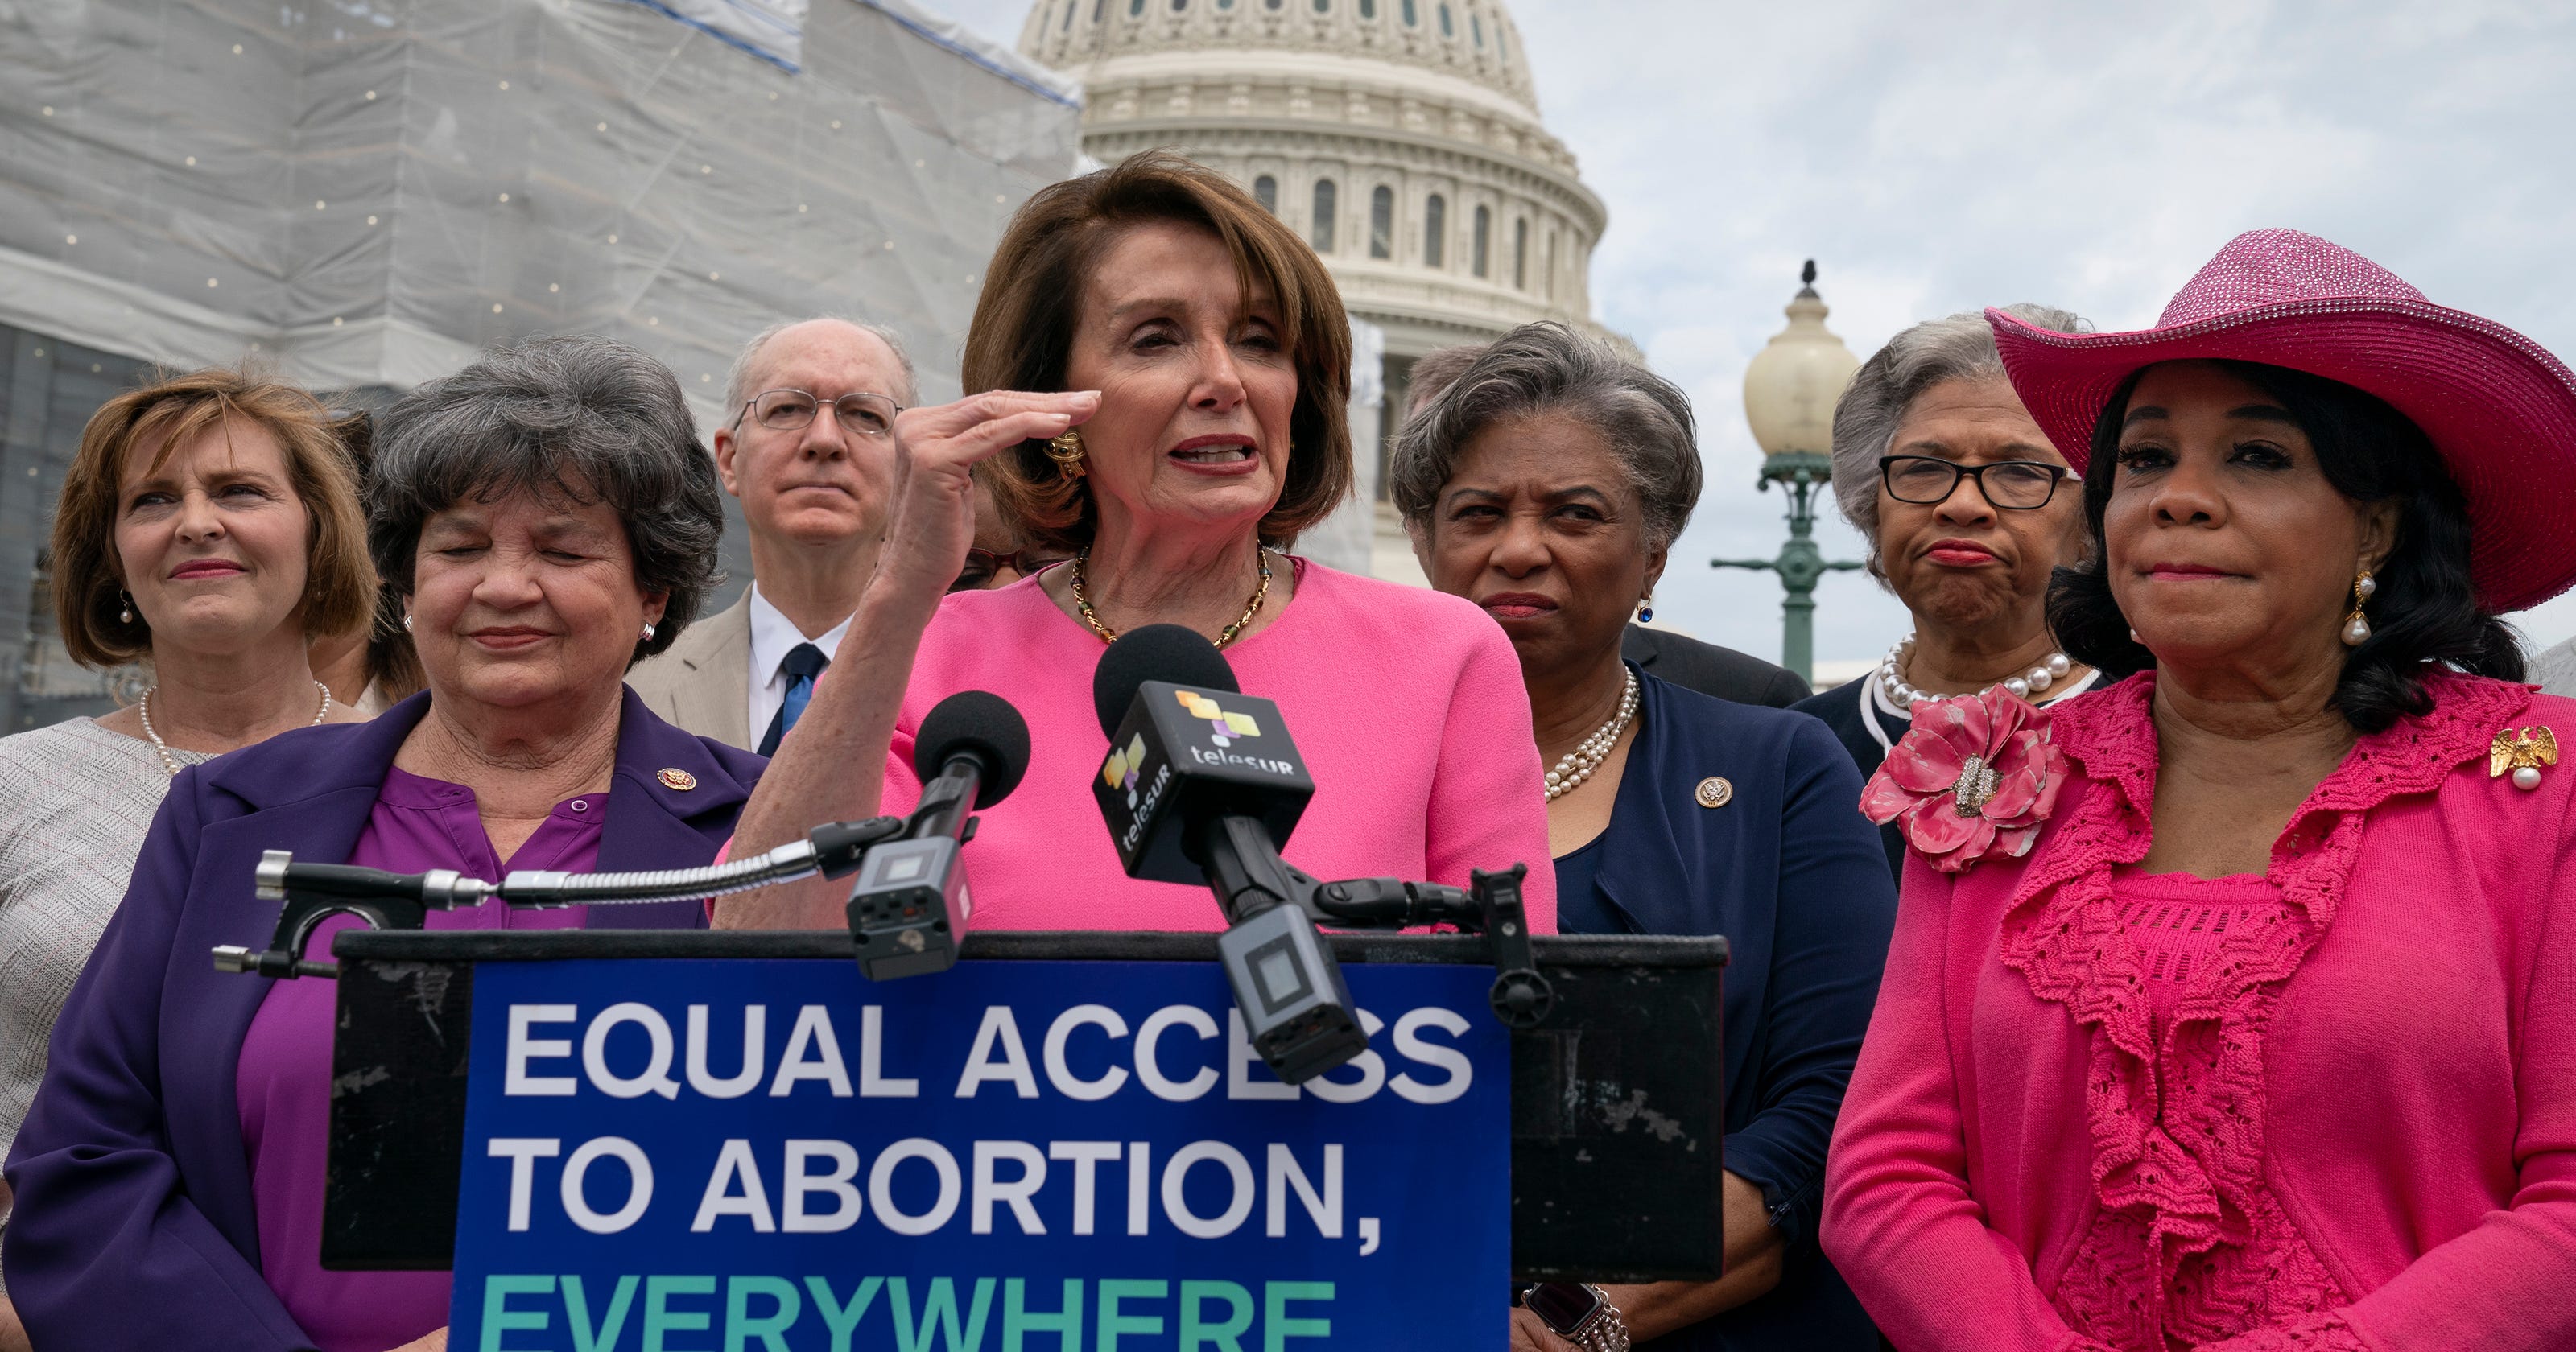 Abortion politics splits Republicans on exceptions, Dems on big tent